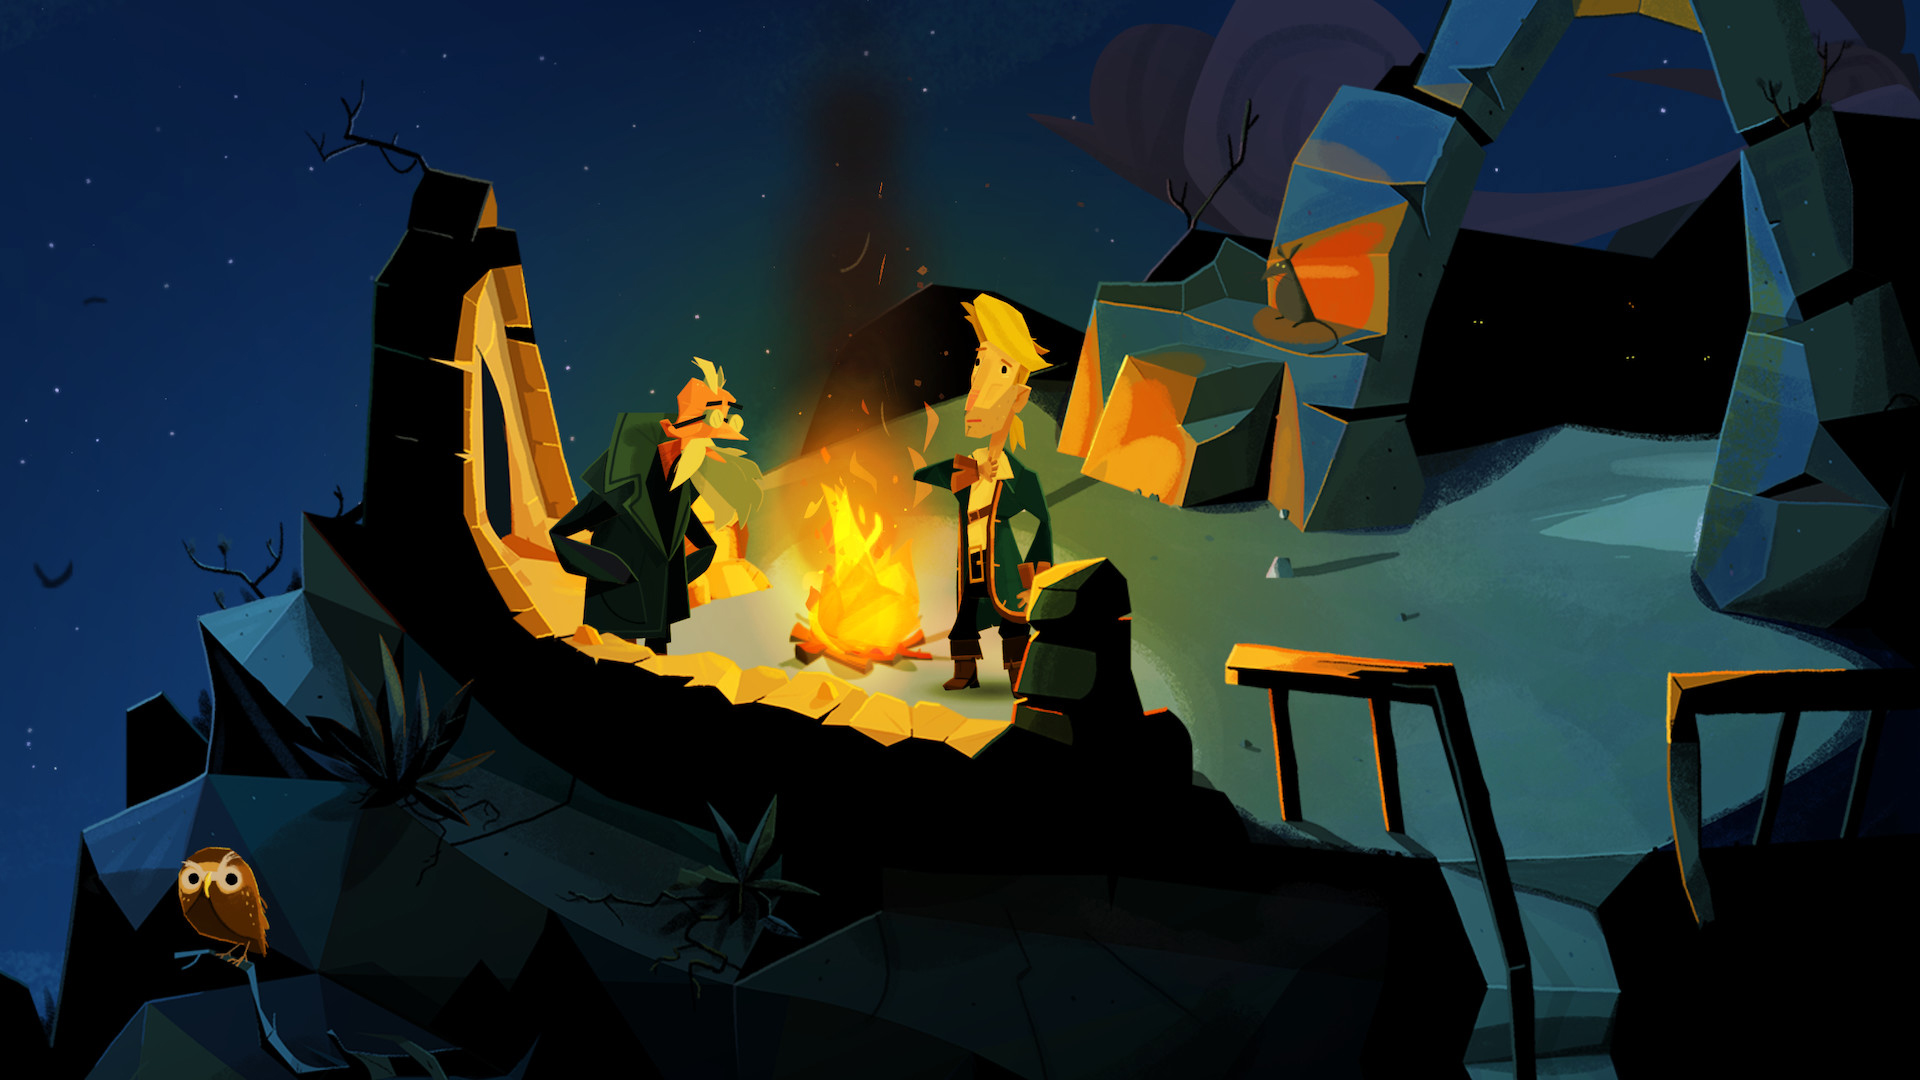 Return to Monkey Island - Android game screenshots.